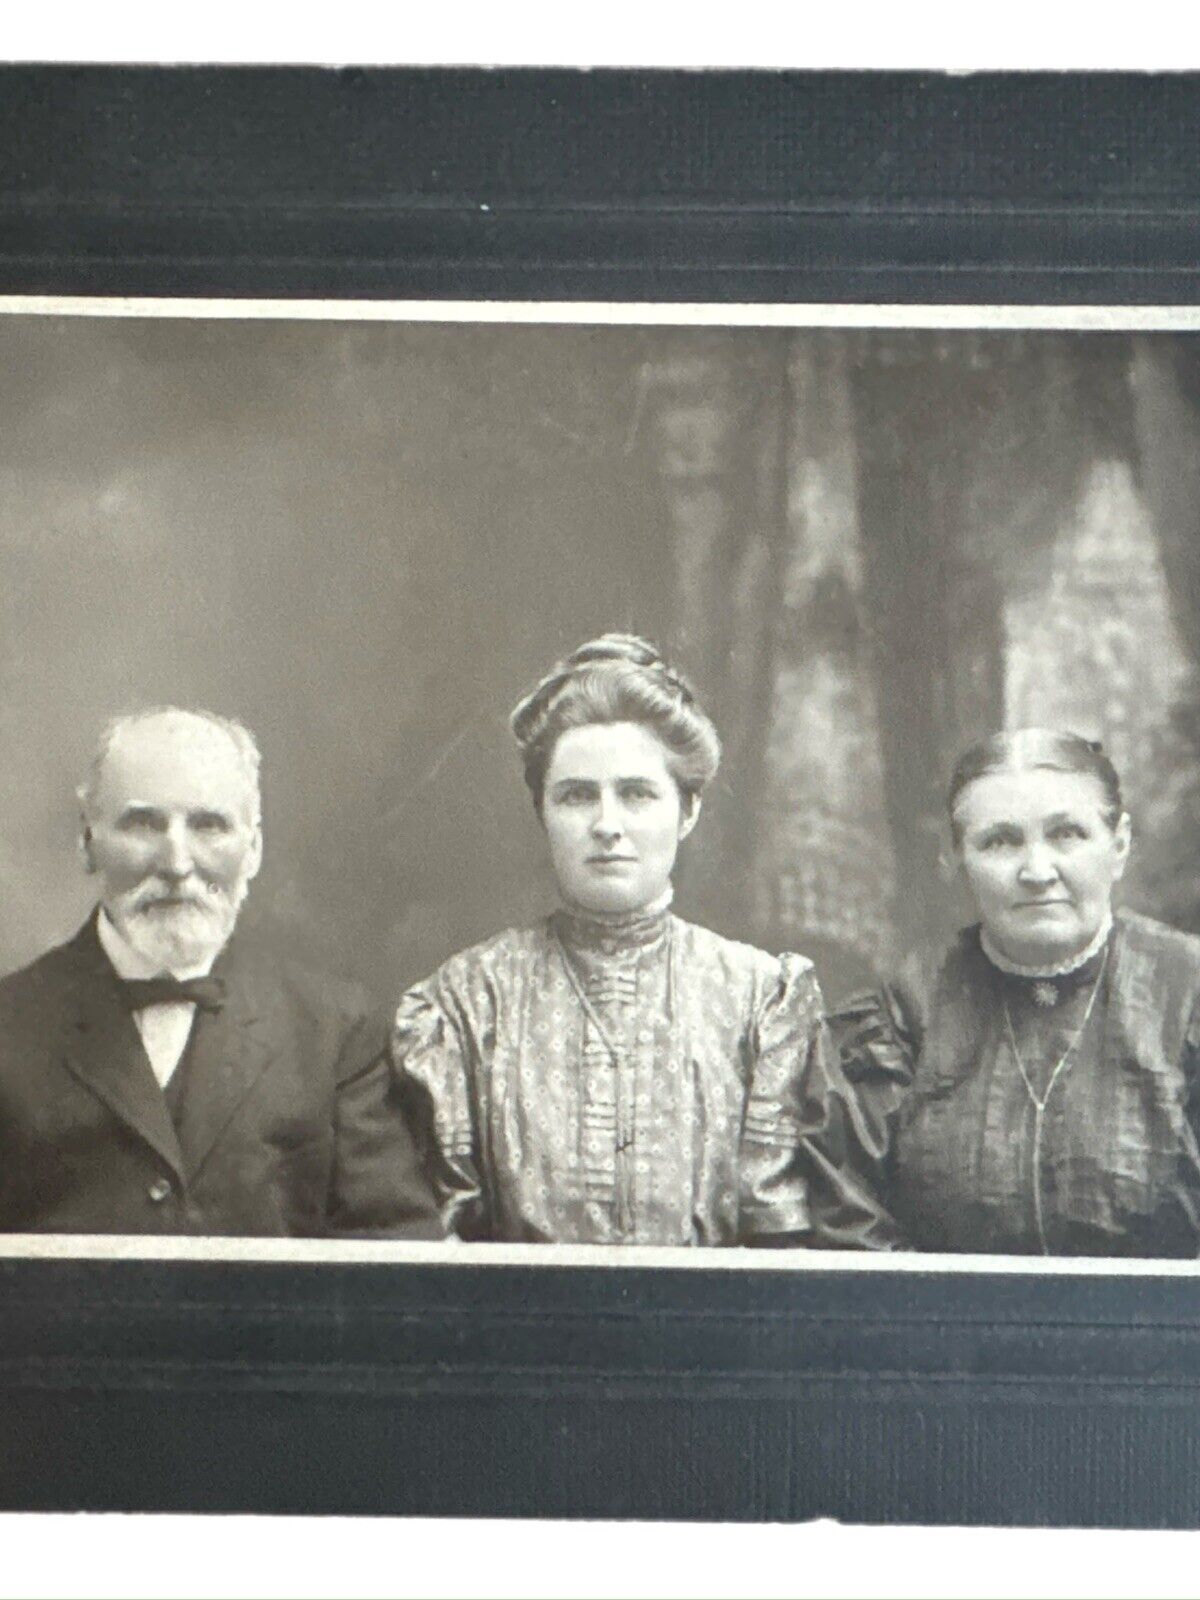 Antique Photograph Cabinet Card Ephemera B/W Unsigned Family Portrait 3 People